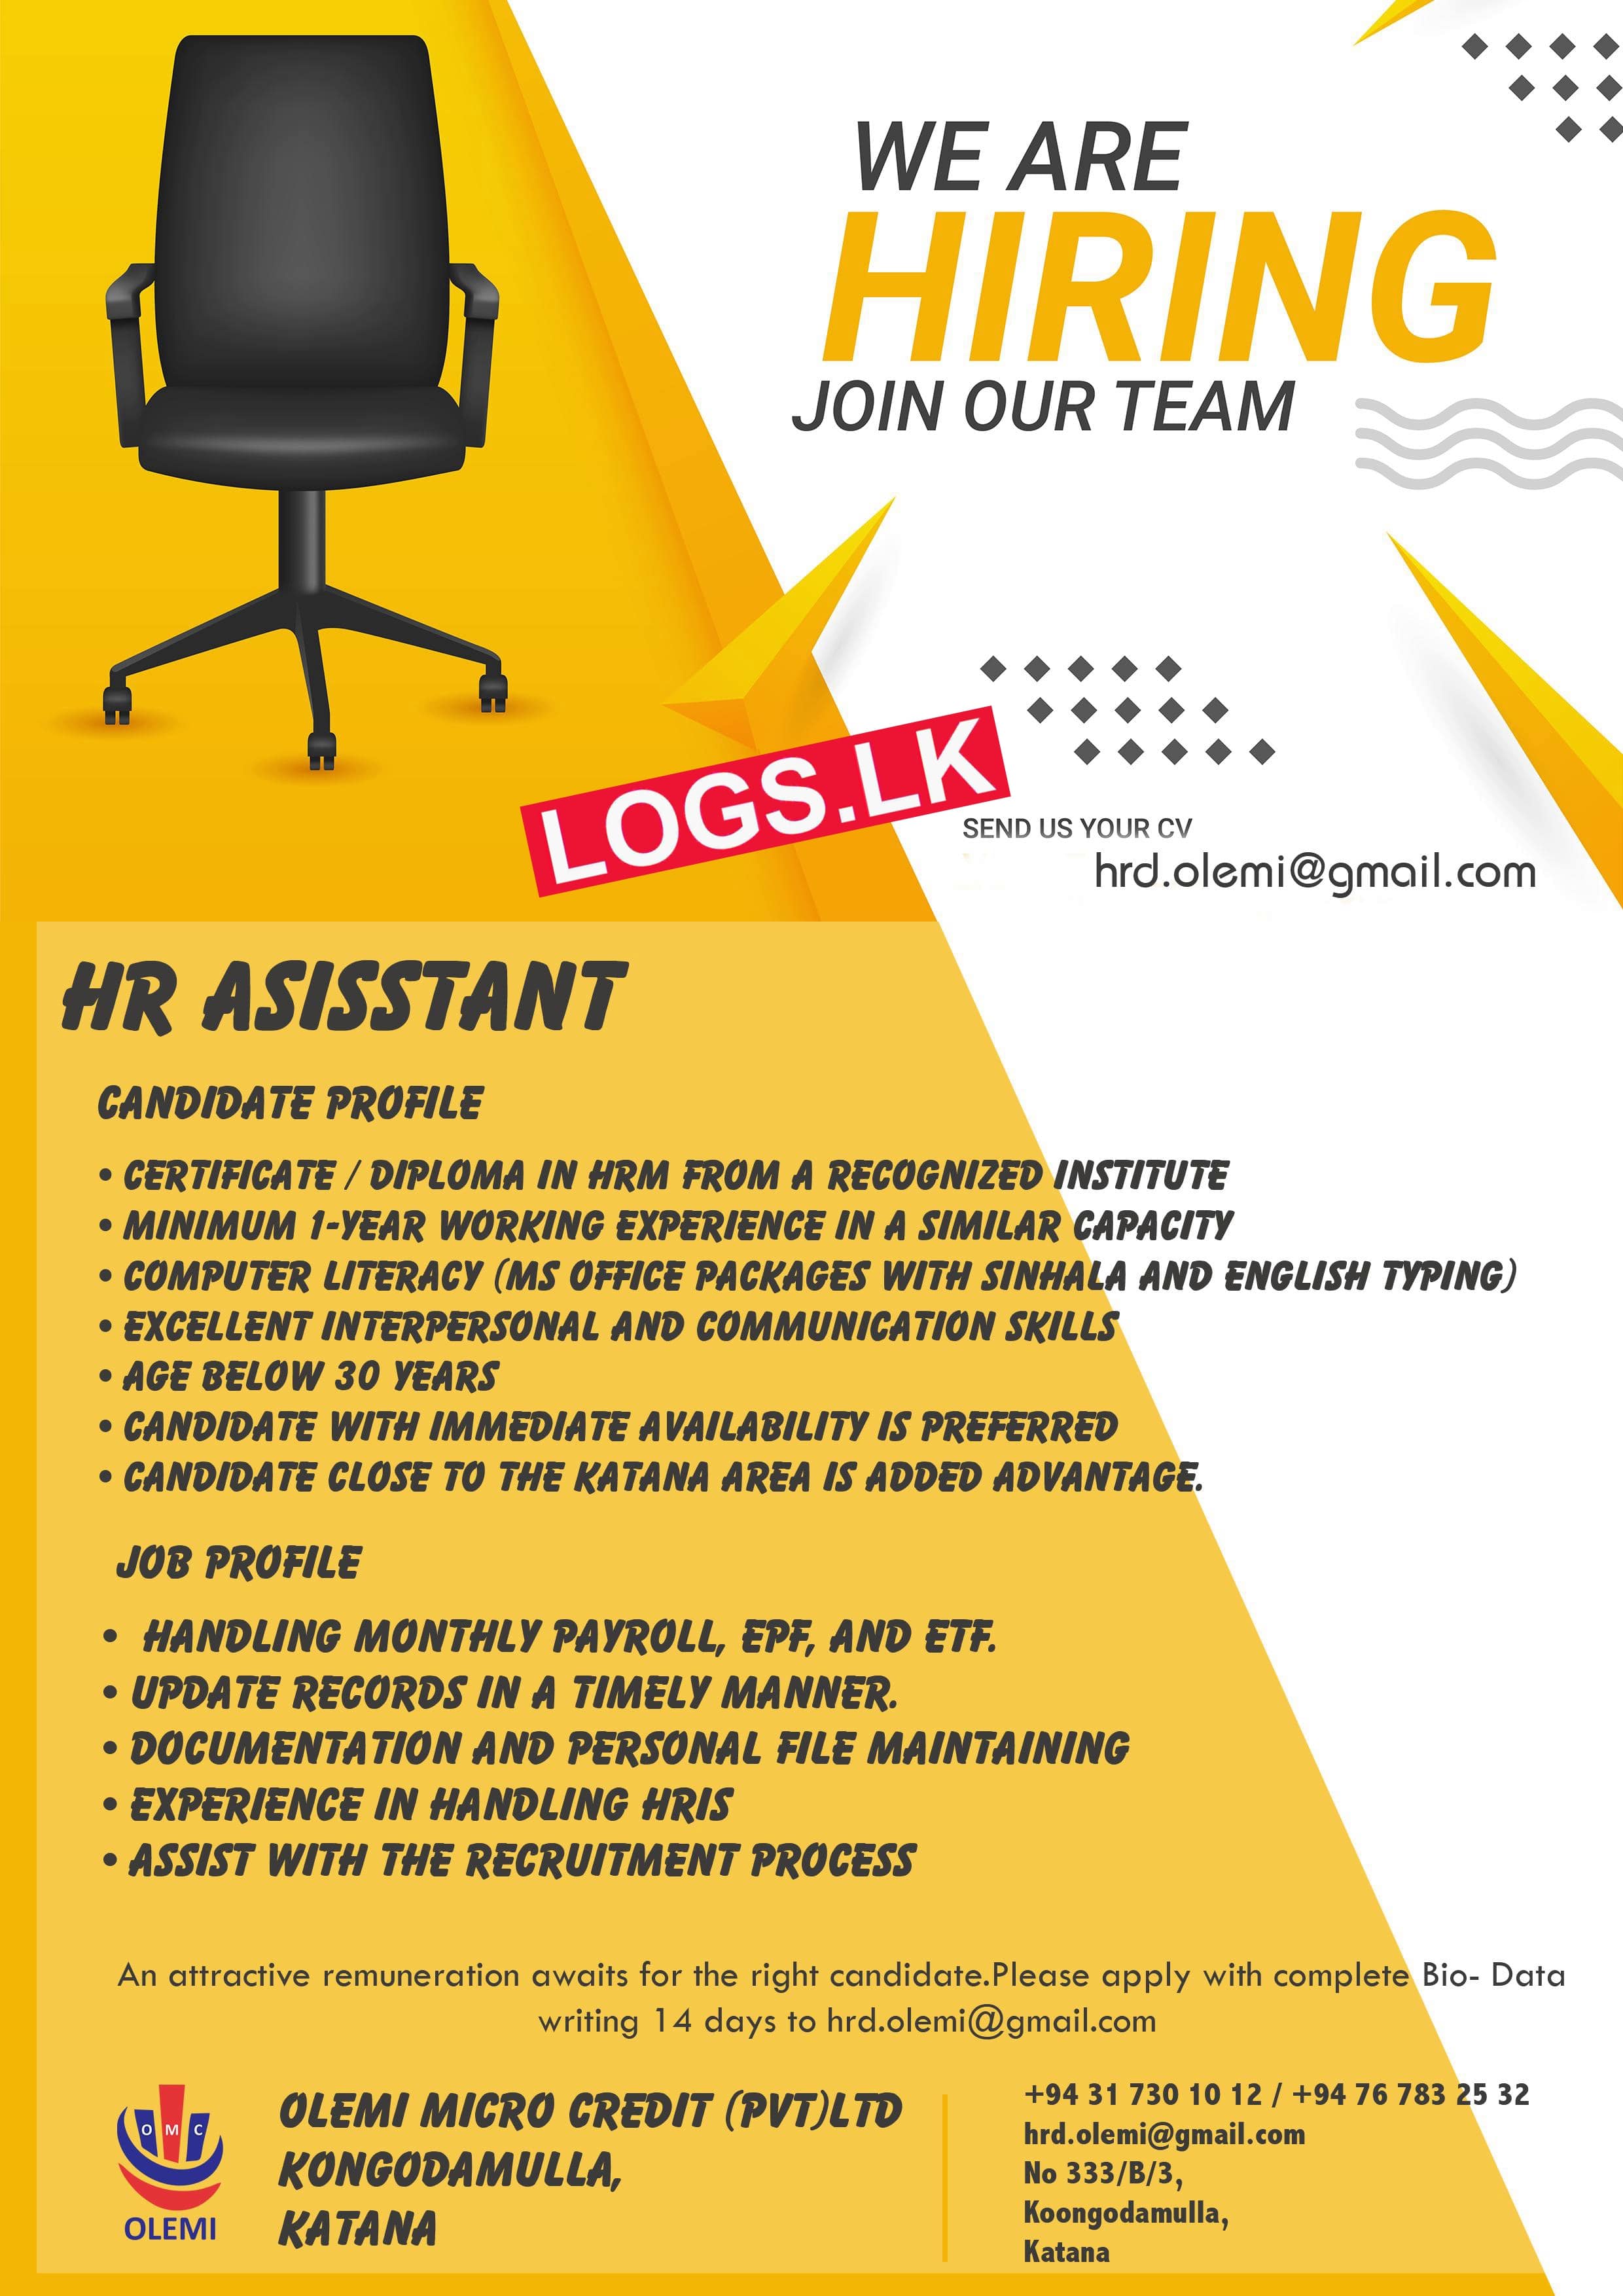 HR Assistant Job Vacancy at OLEMI Micro Credit (Pvt) Ltd Job Vacancies in Sri Lanka